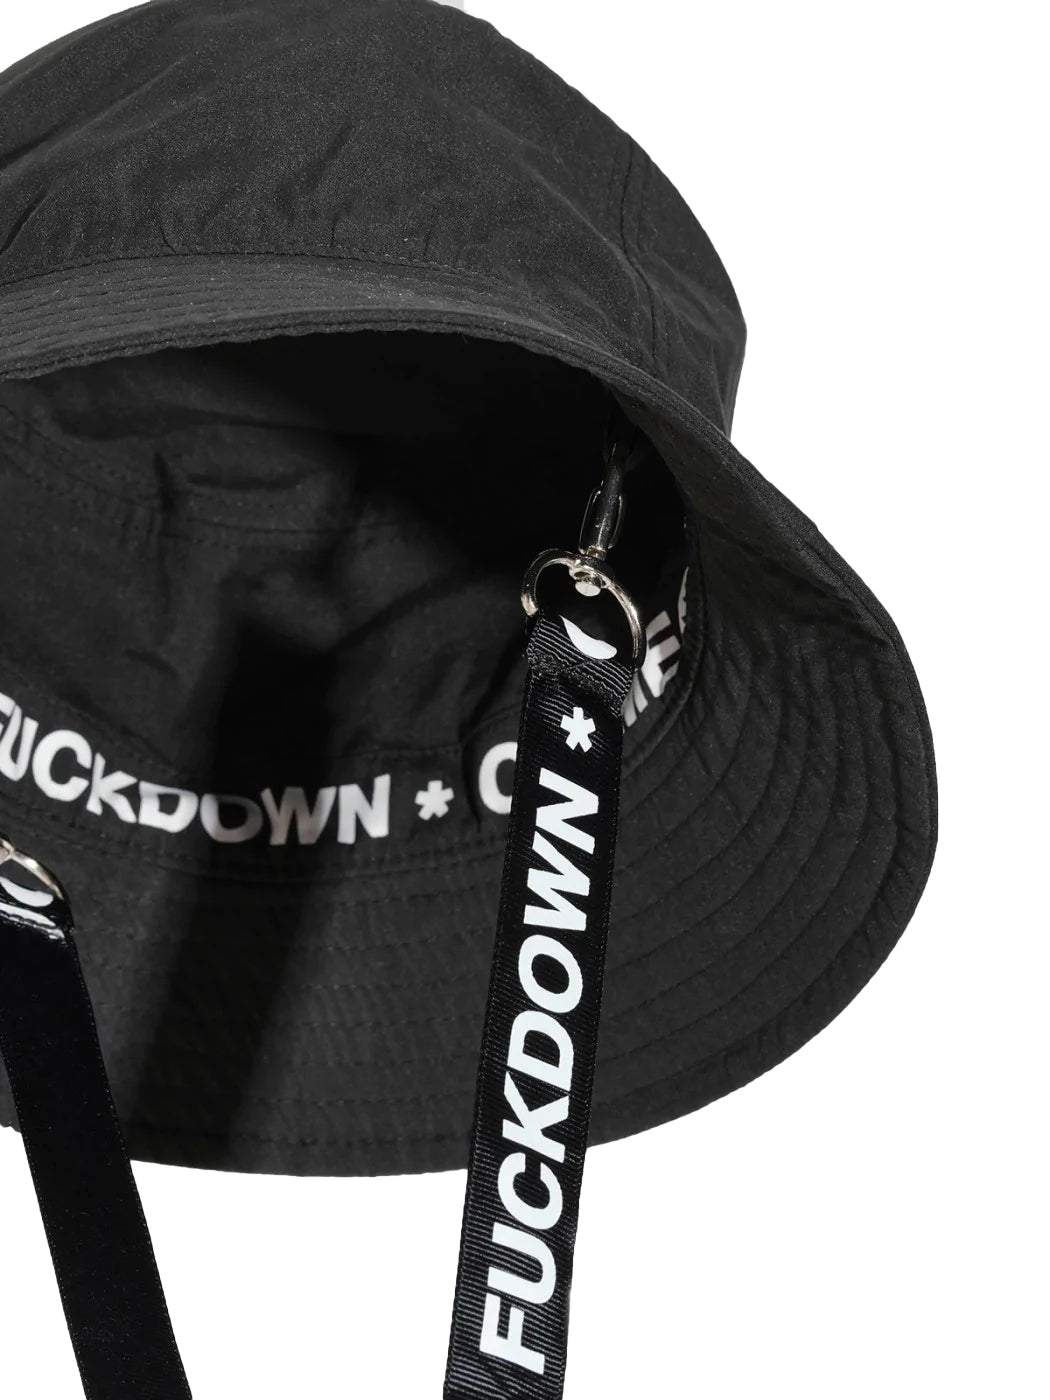 Comme Des Fuckdown Black Polyester Hats & Cap #men, Black, Comme Des Fuckdown, feed-1, Hats & Caps - Men - Accessories at SEYMAYKA